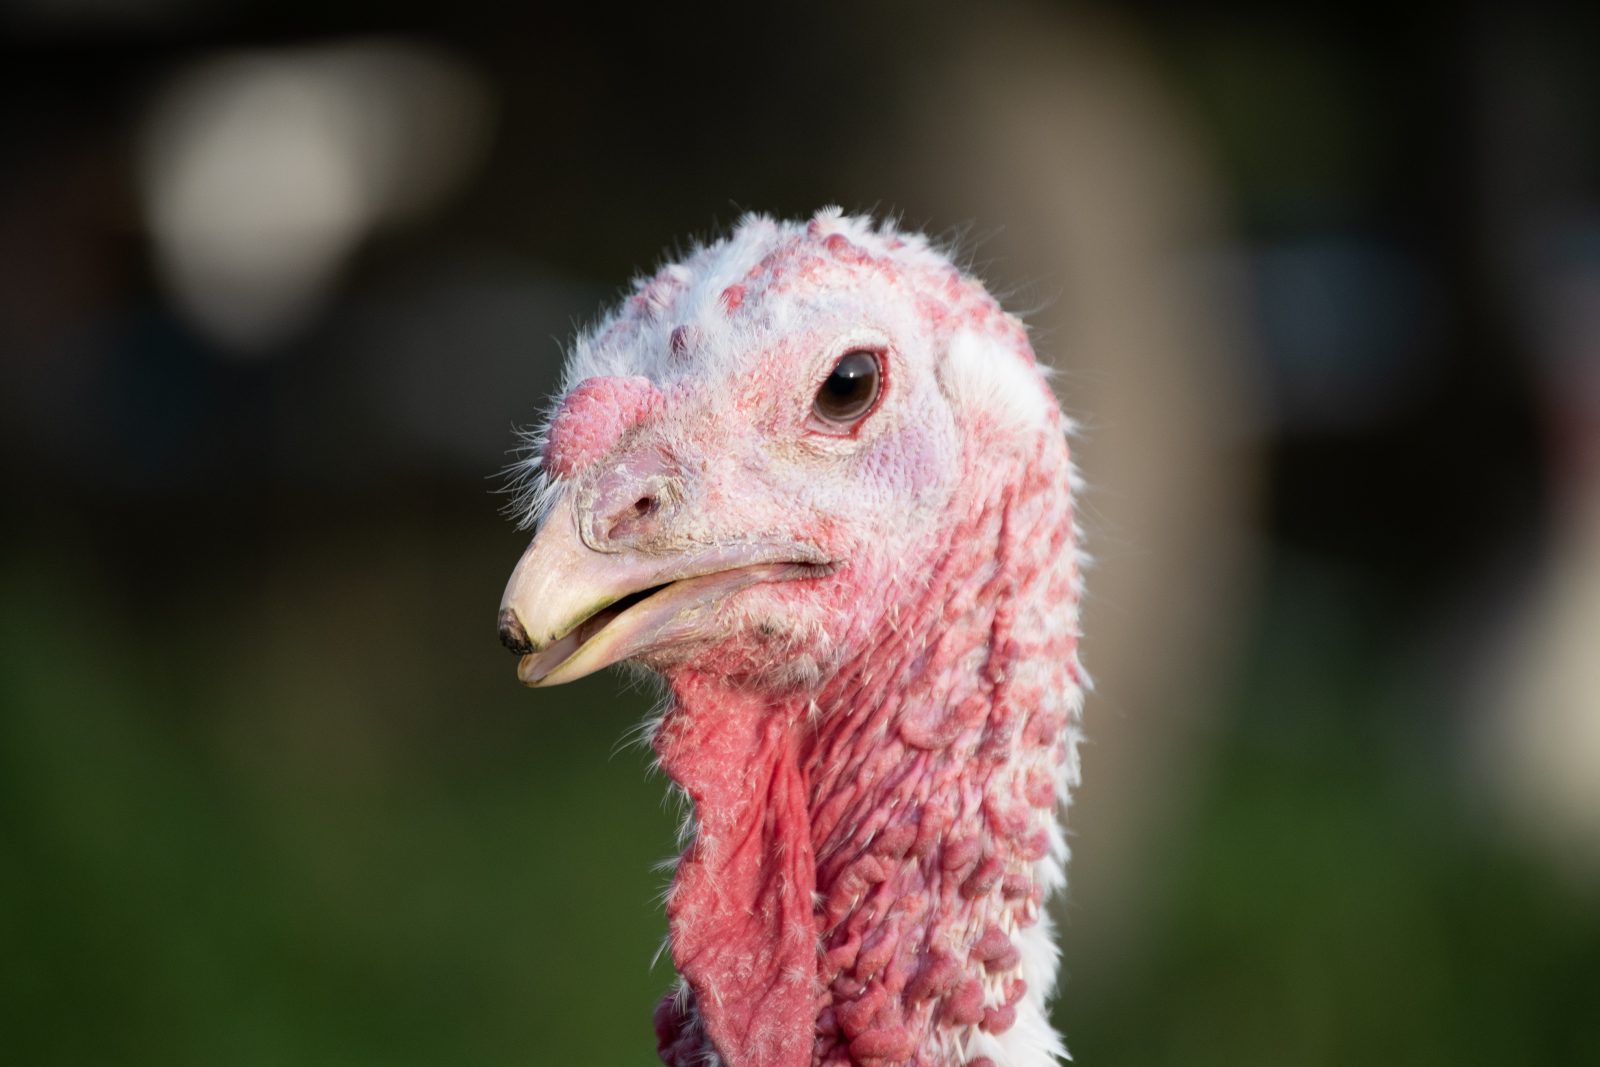 Perdita turkey at Farm Sanctuary